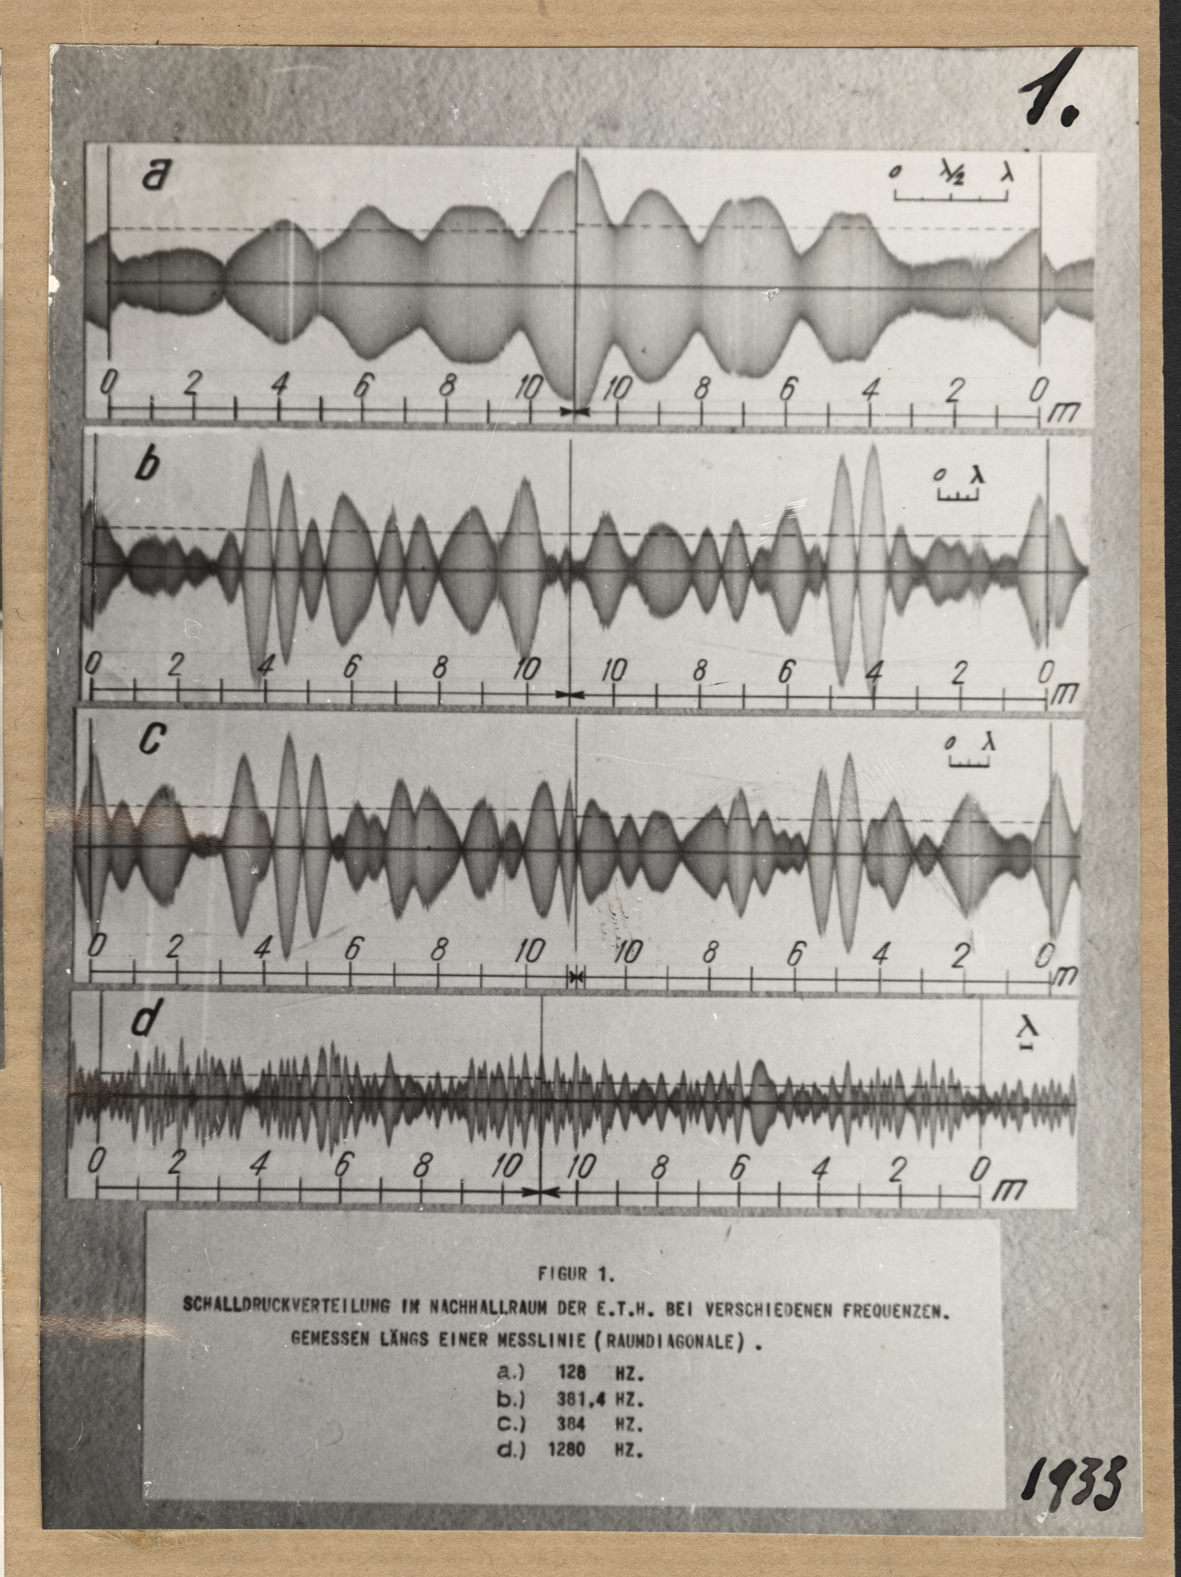 Acoustics laboratory, E.T.H. Zürich: Oscillation chart of the adjacent reverberation room